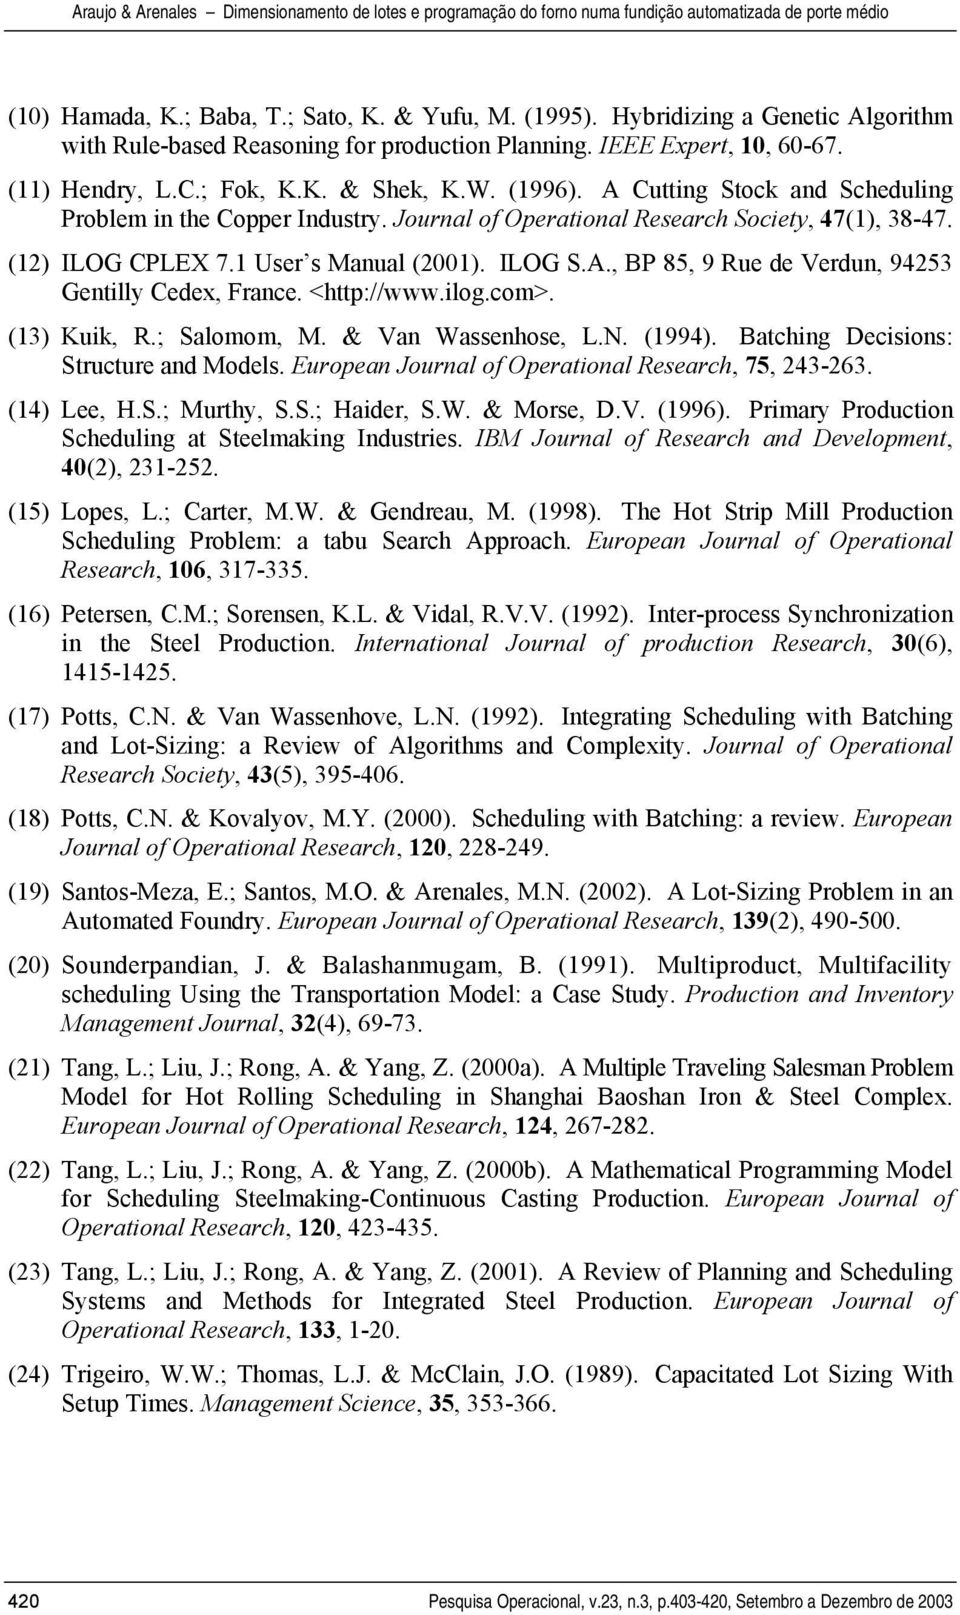 <hp://www.ilog.com>. (3) Kui, R.; Salomom, M. & Van Wassenhose, L.N. (994). Baching Decisions: Srucure and Models. European Journal of Operaional Research, 75, 243-263. (4) Lee, H.S.; Murhy, S.S.; Haider, S.